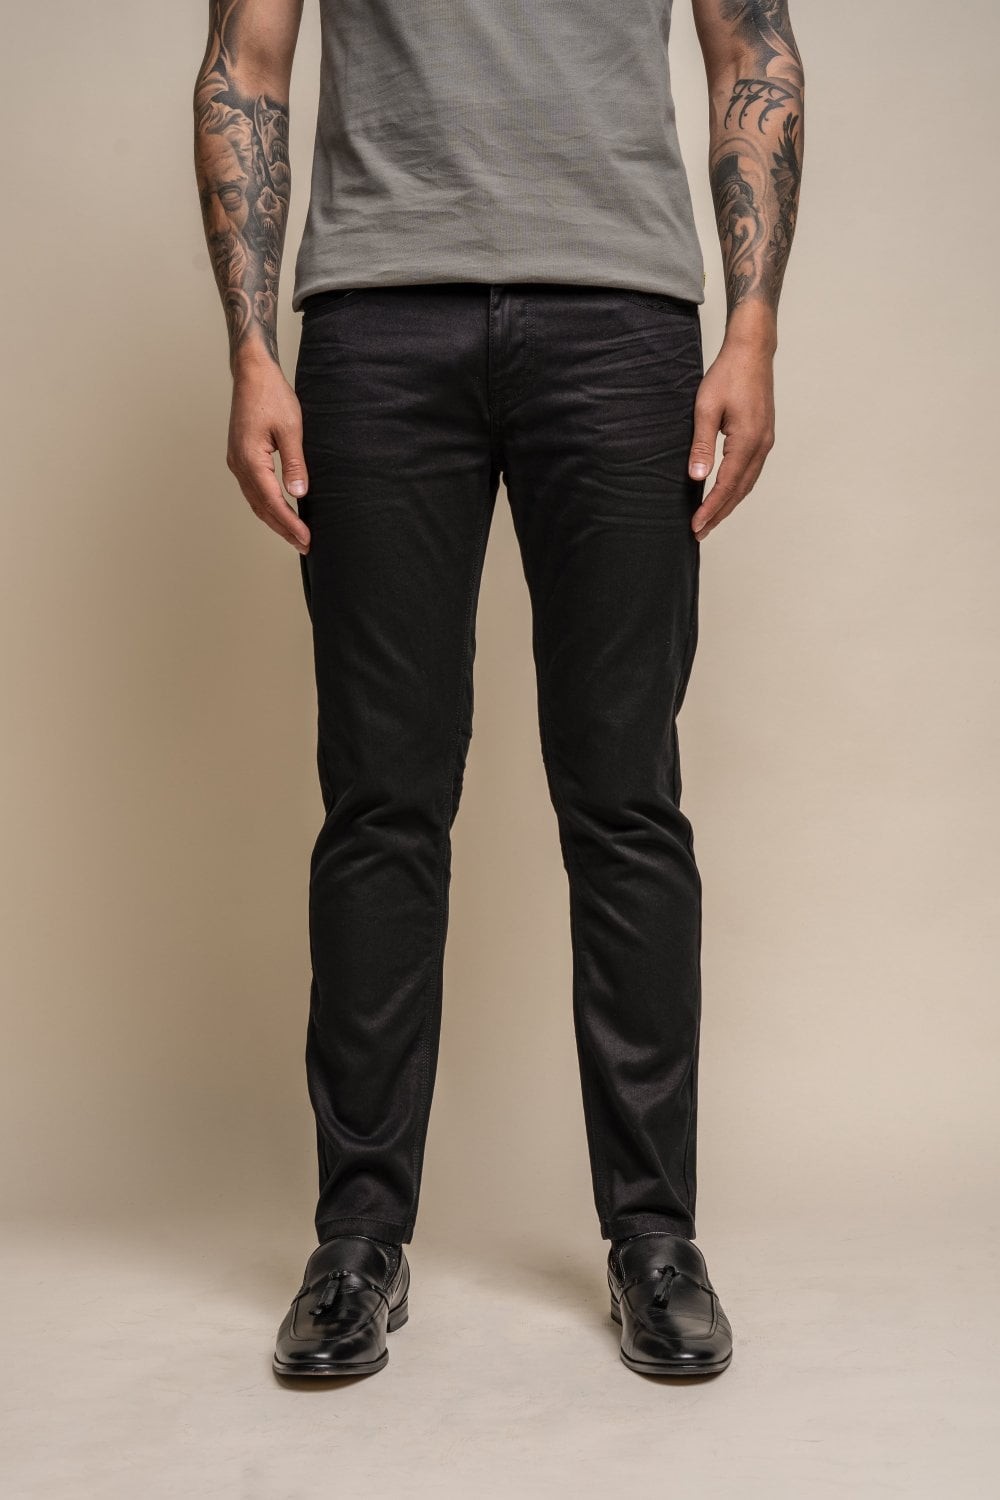 Men's Casual Slim Fit Denim Jeans - BRAD